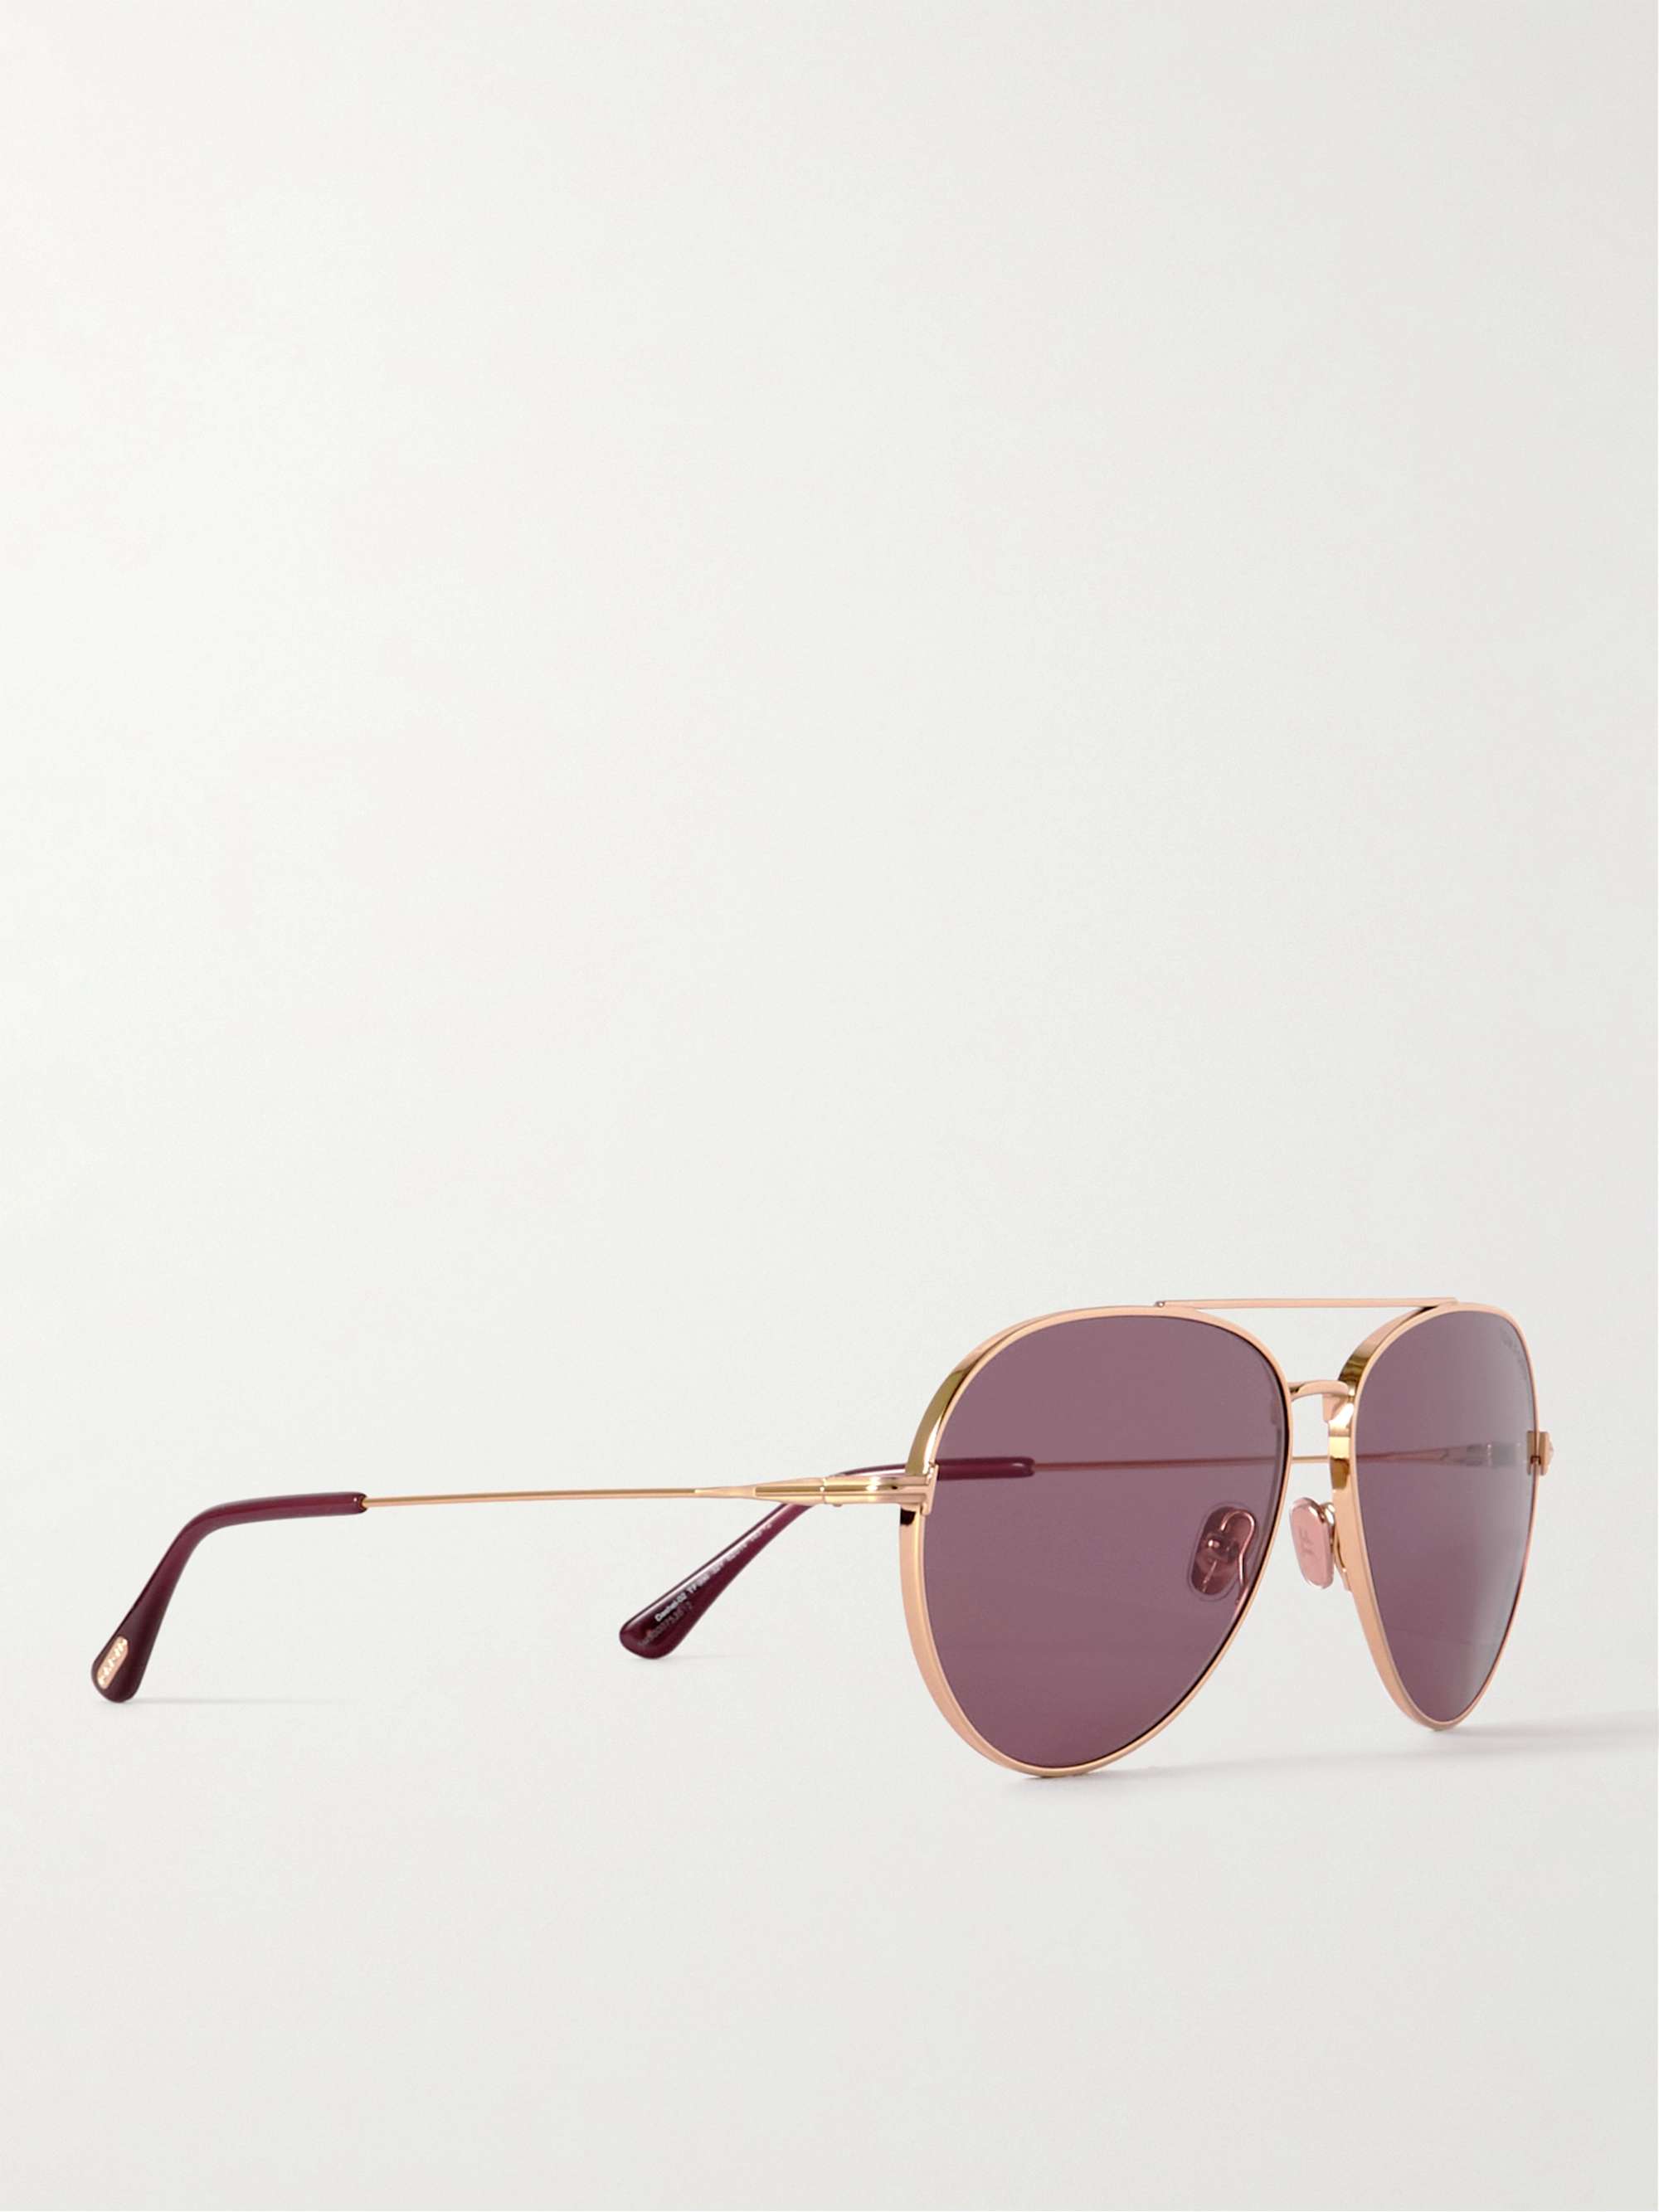 TOM FORD Aviator-Style Gold-Tone Sunglasses